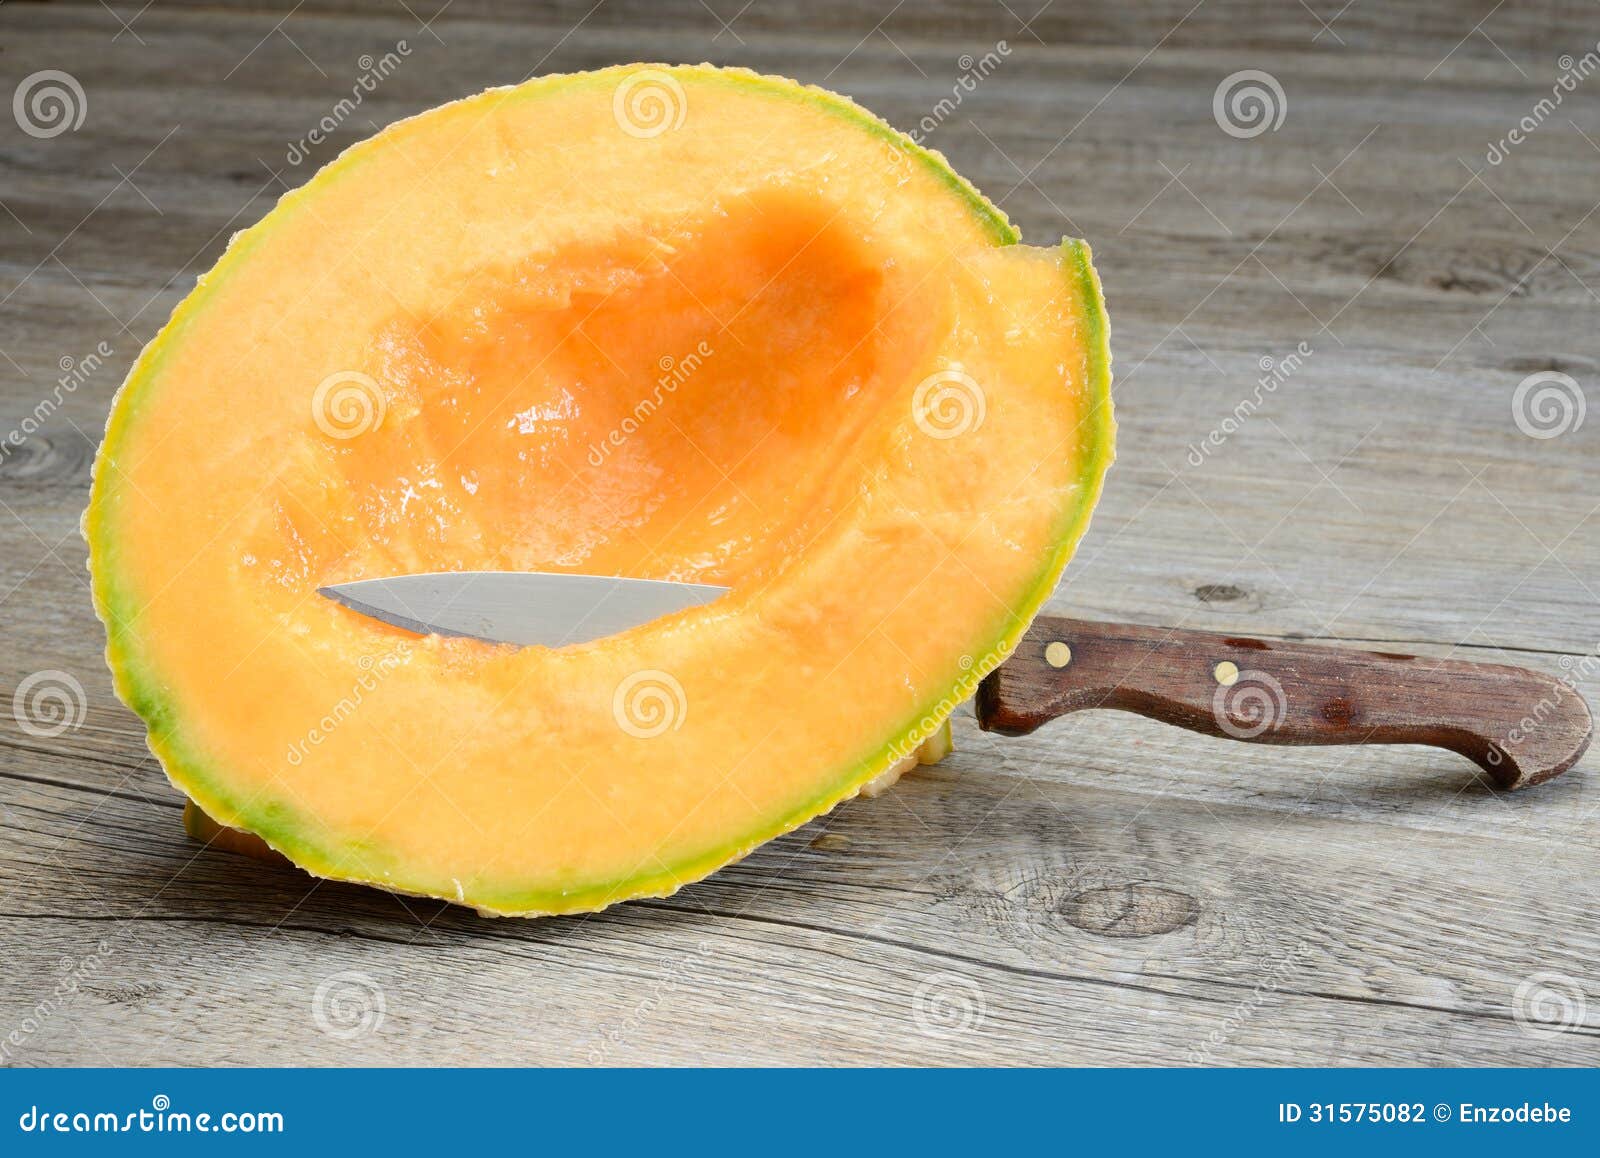 cantalupo melon